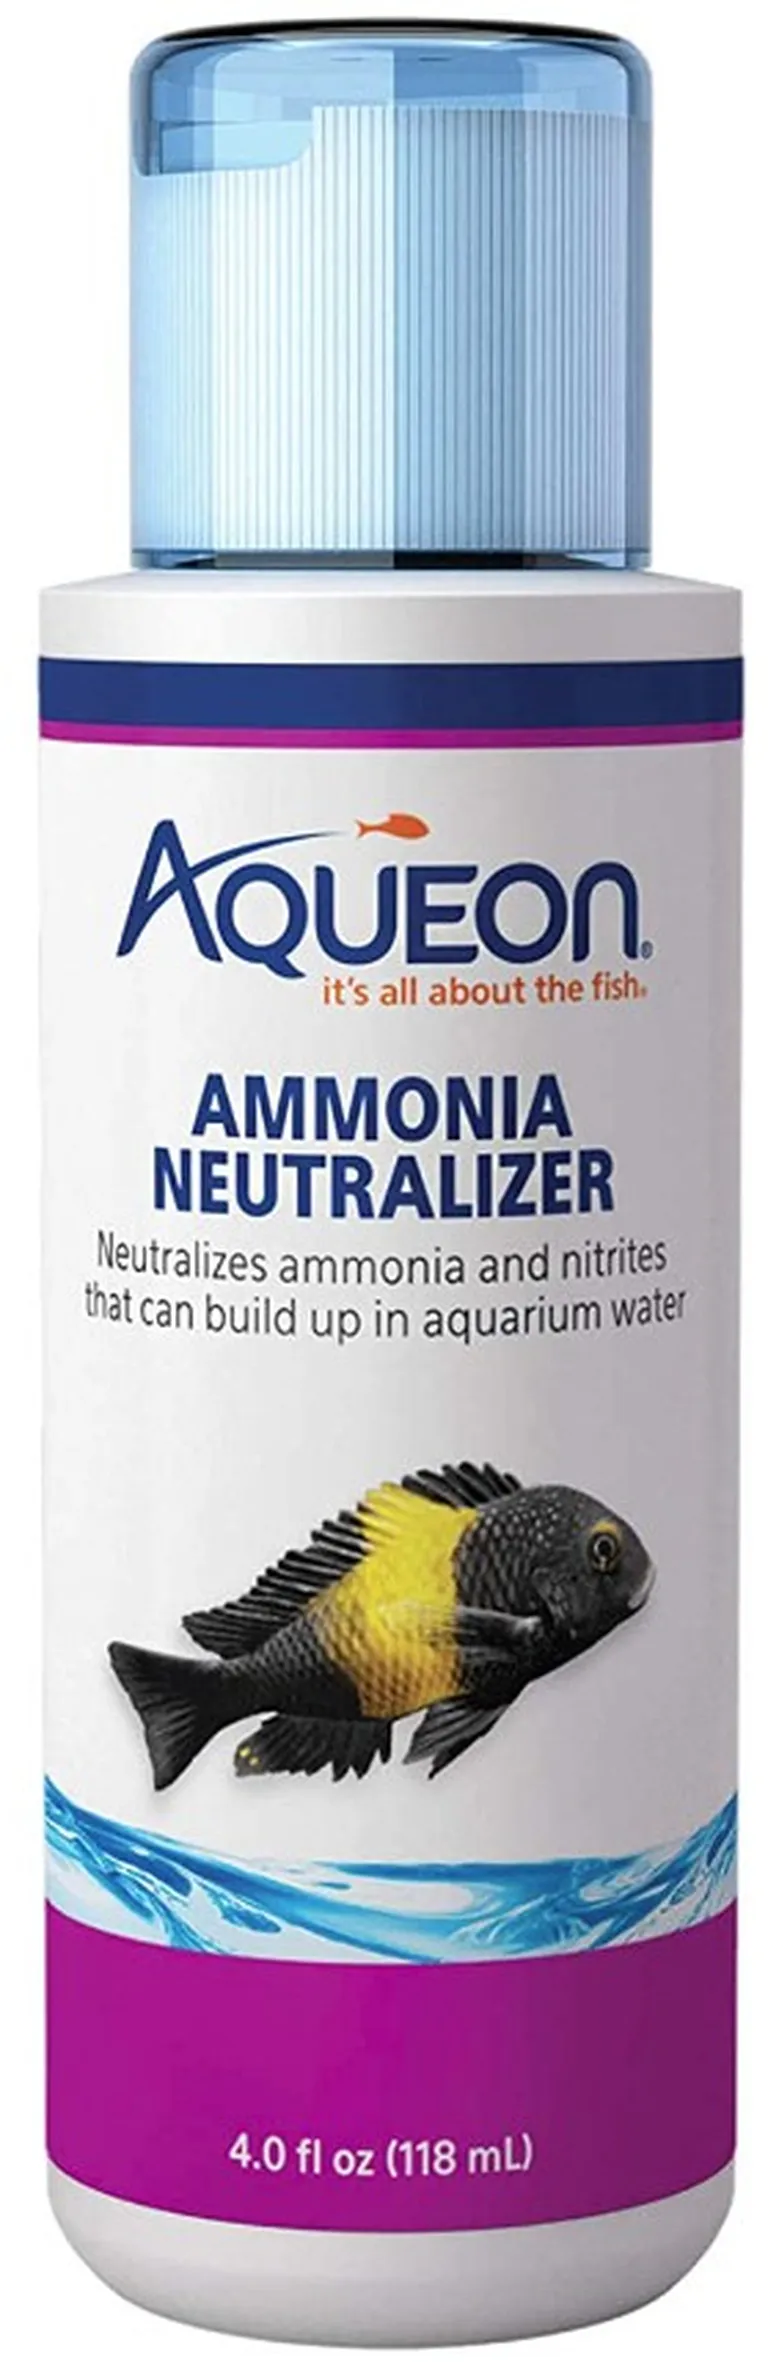 Aqueon Ammonia Neutralizer for Freshwater and Saltwater Aquariums Photo 1